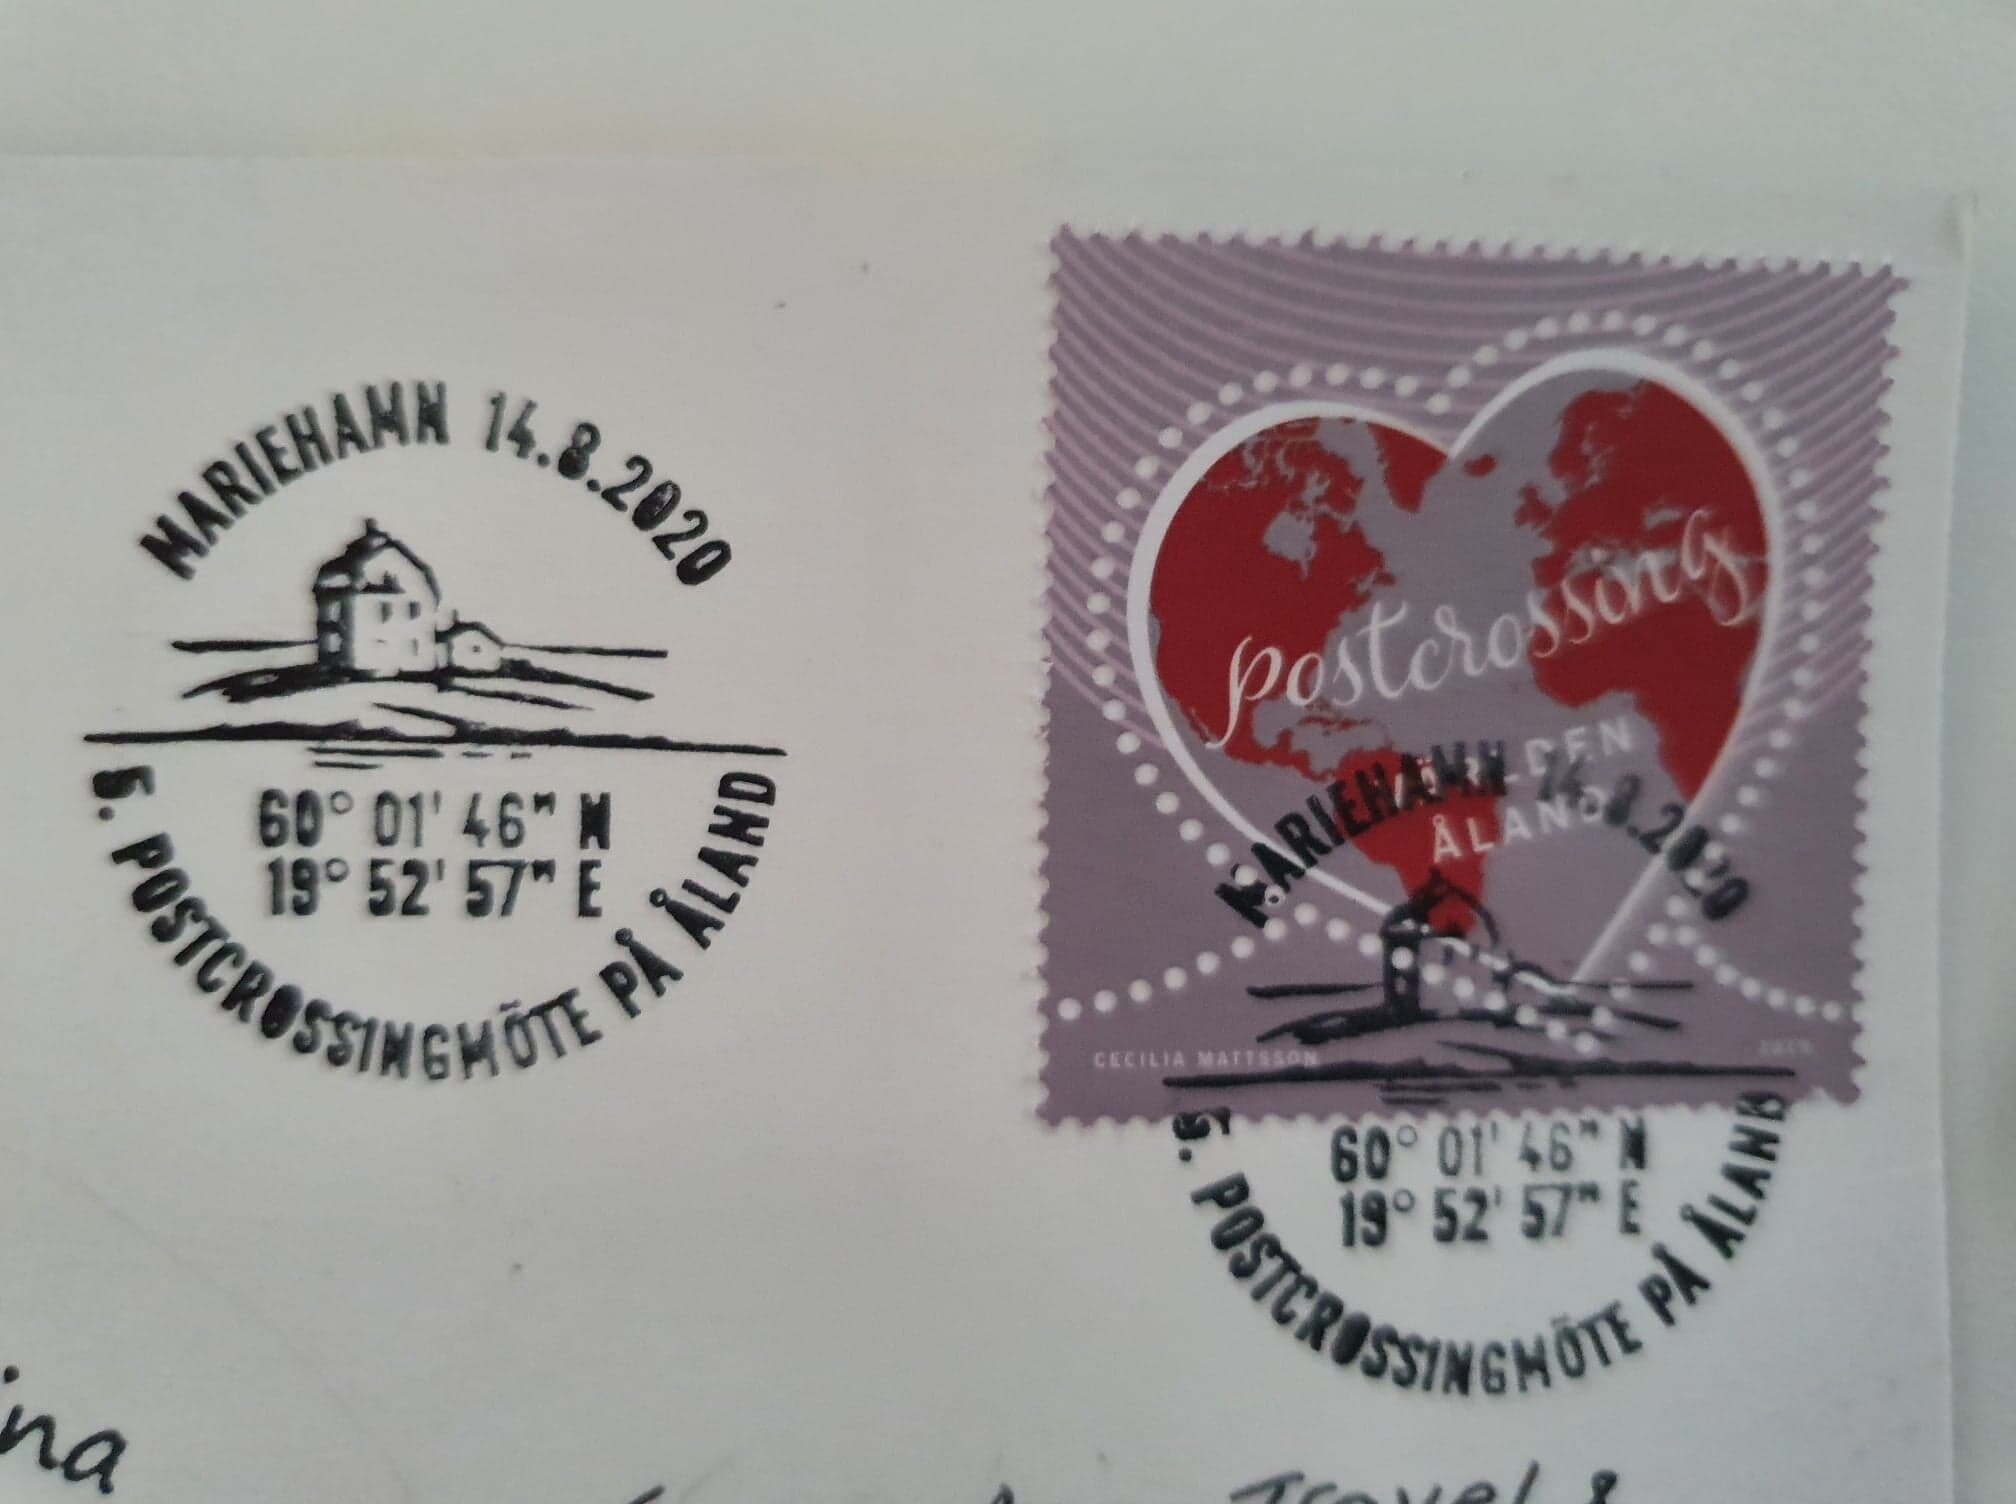 Postcross-stamp.jpg